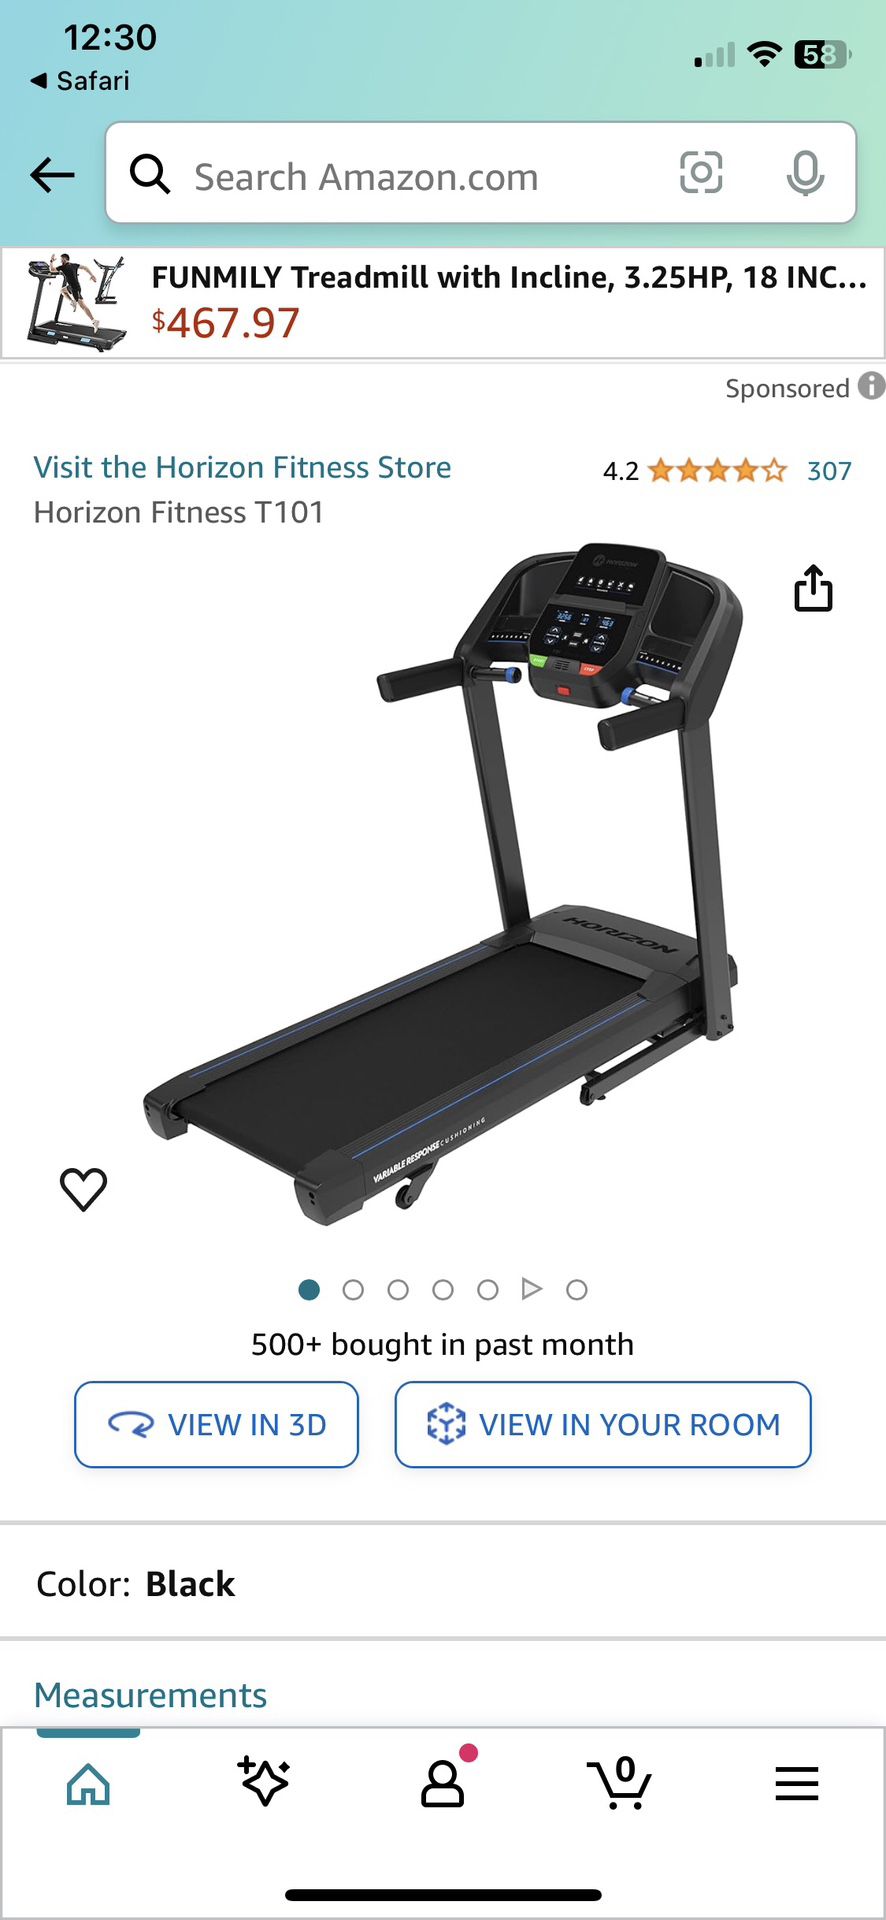 Horizon Treadmill RST5.6